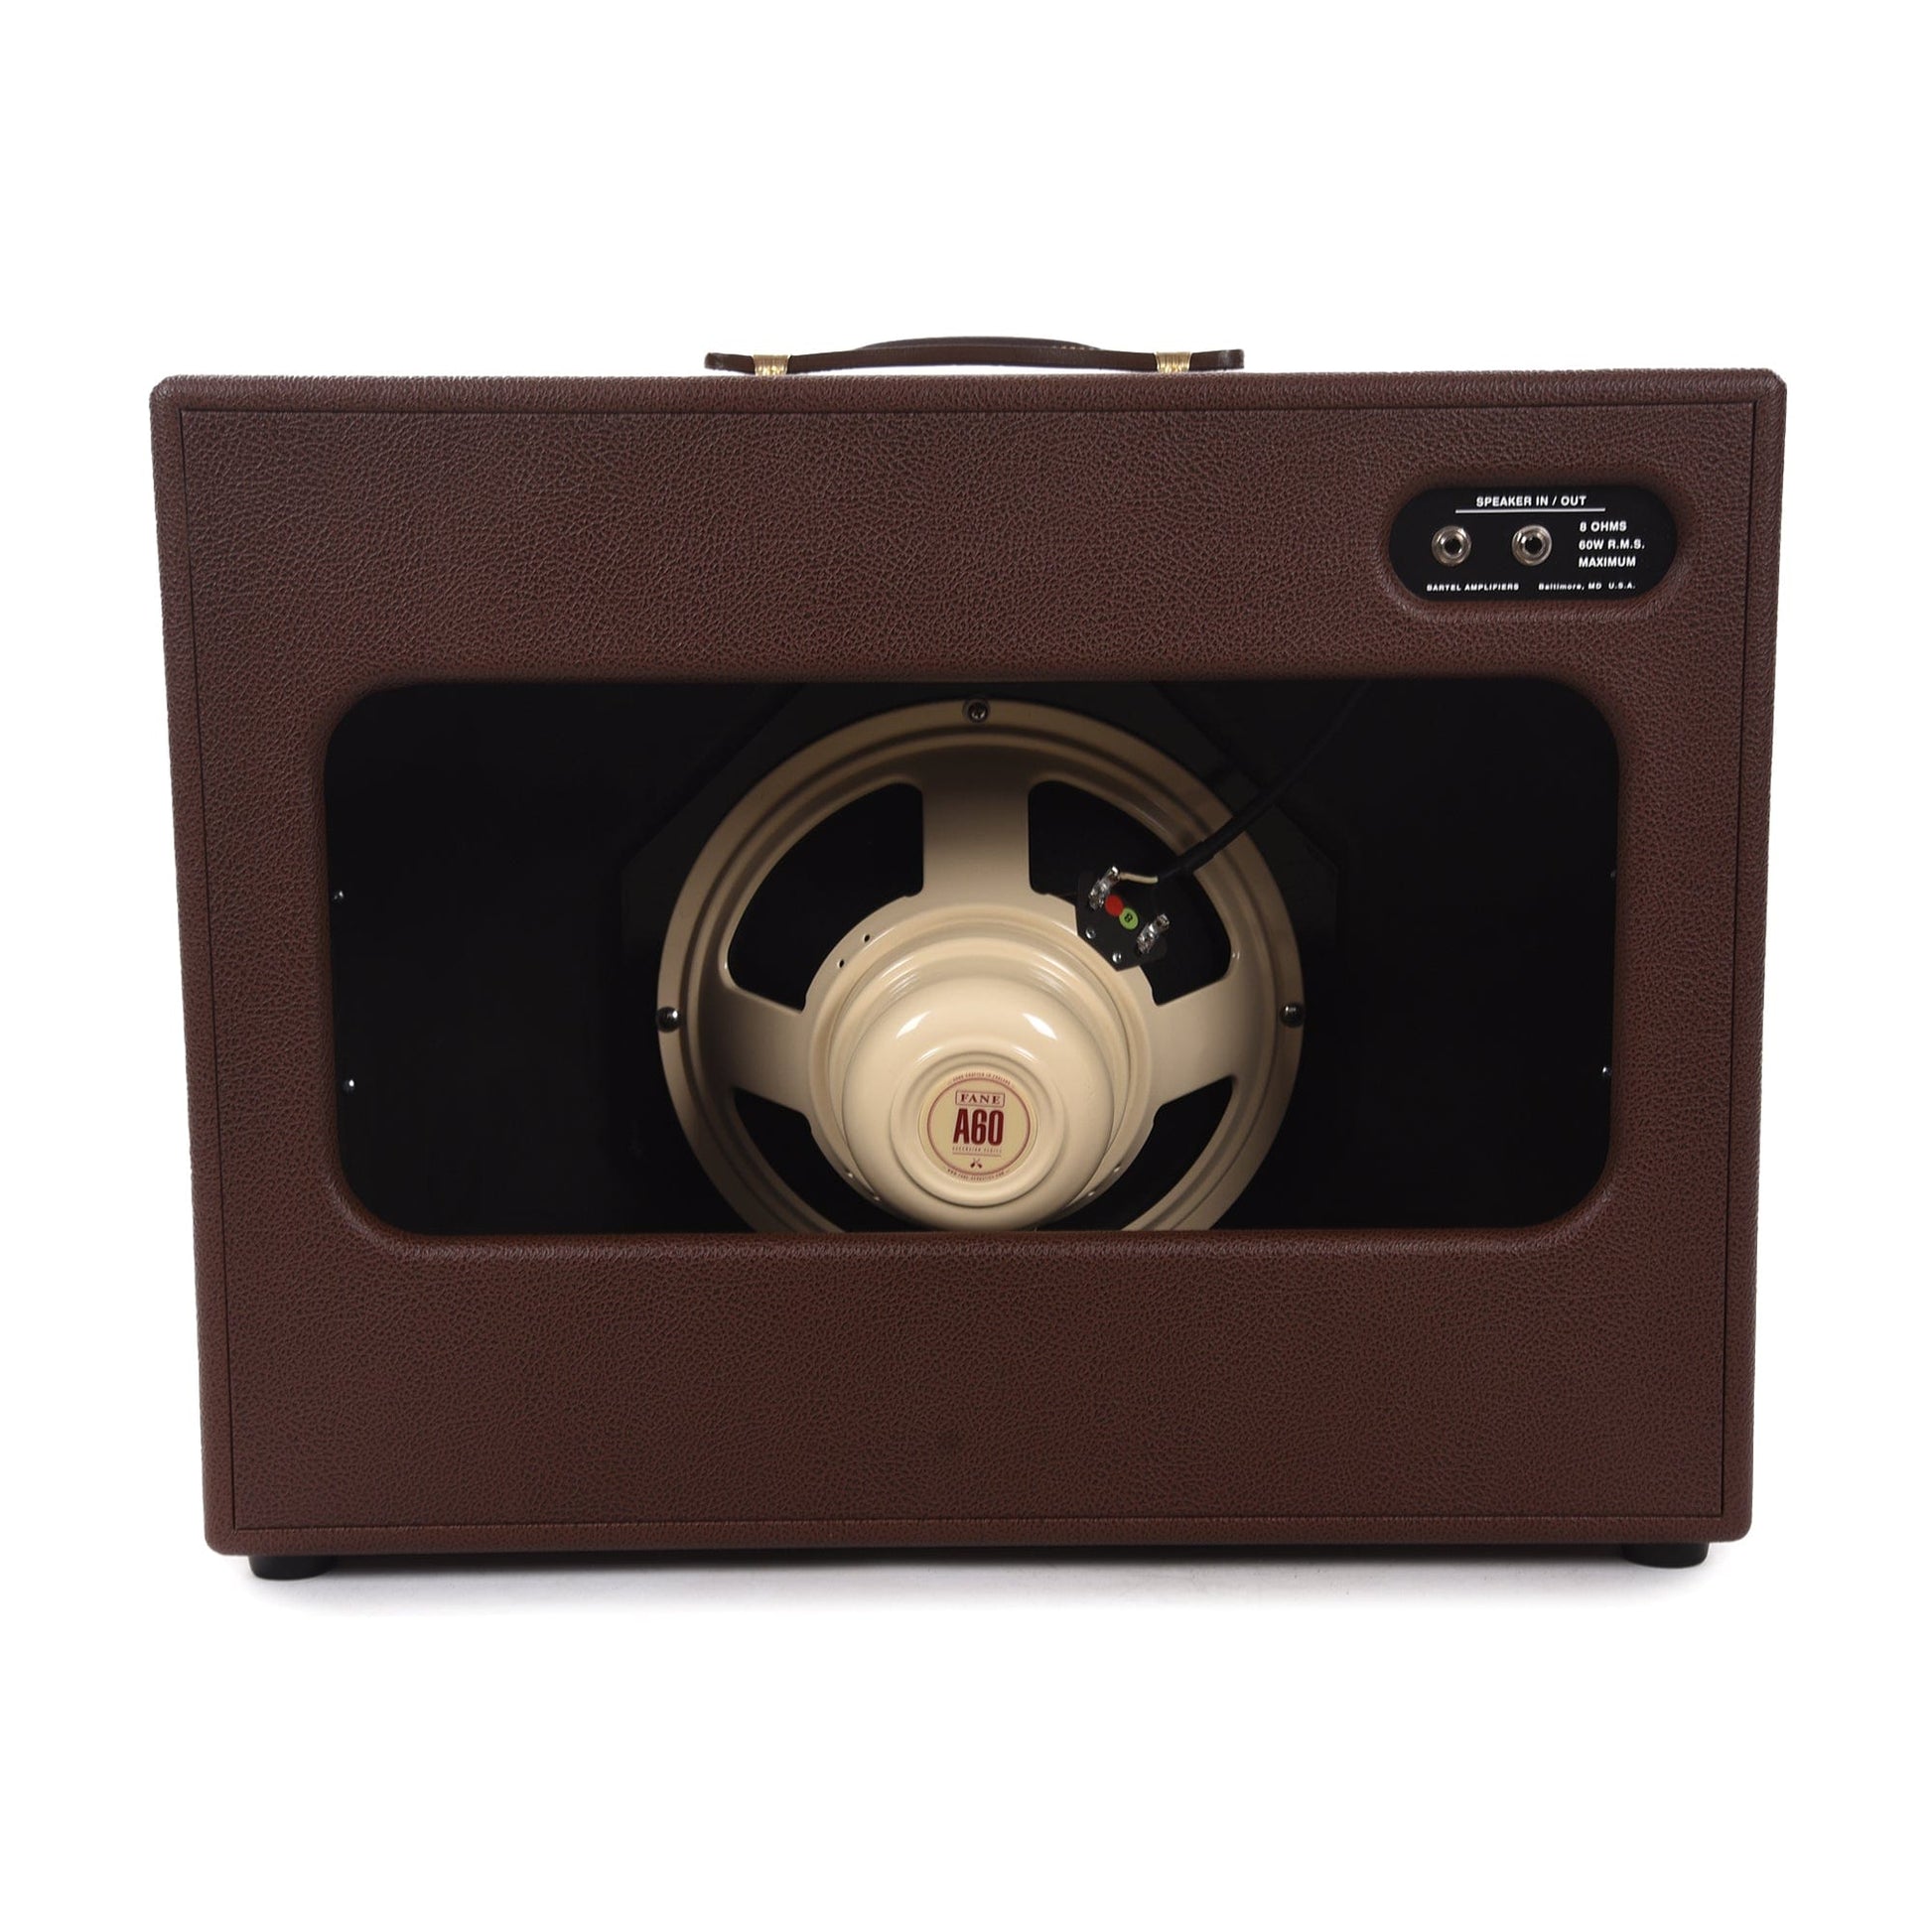 Bartel Roseland 1x12 Extension Cabinet Slanted Front Ivory/Brown Tolex w/Fane Alnico A60 Speaker Amps / Guitar Cabinets